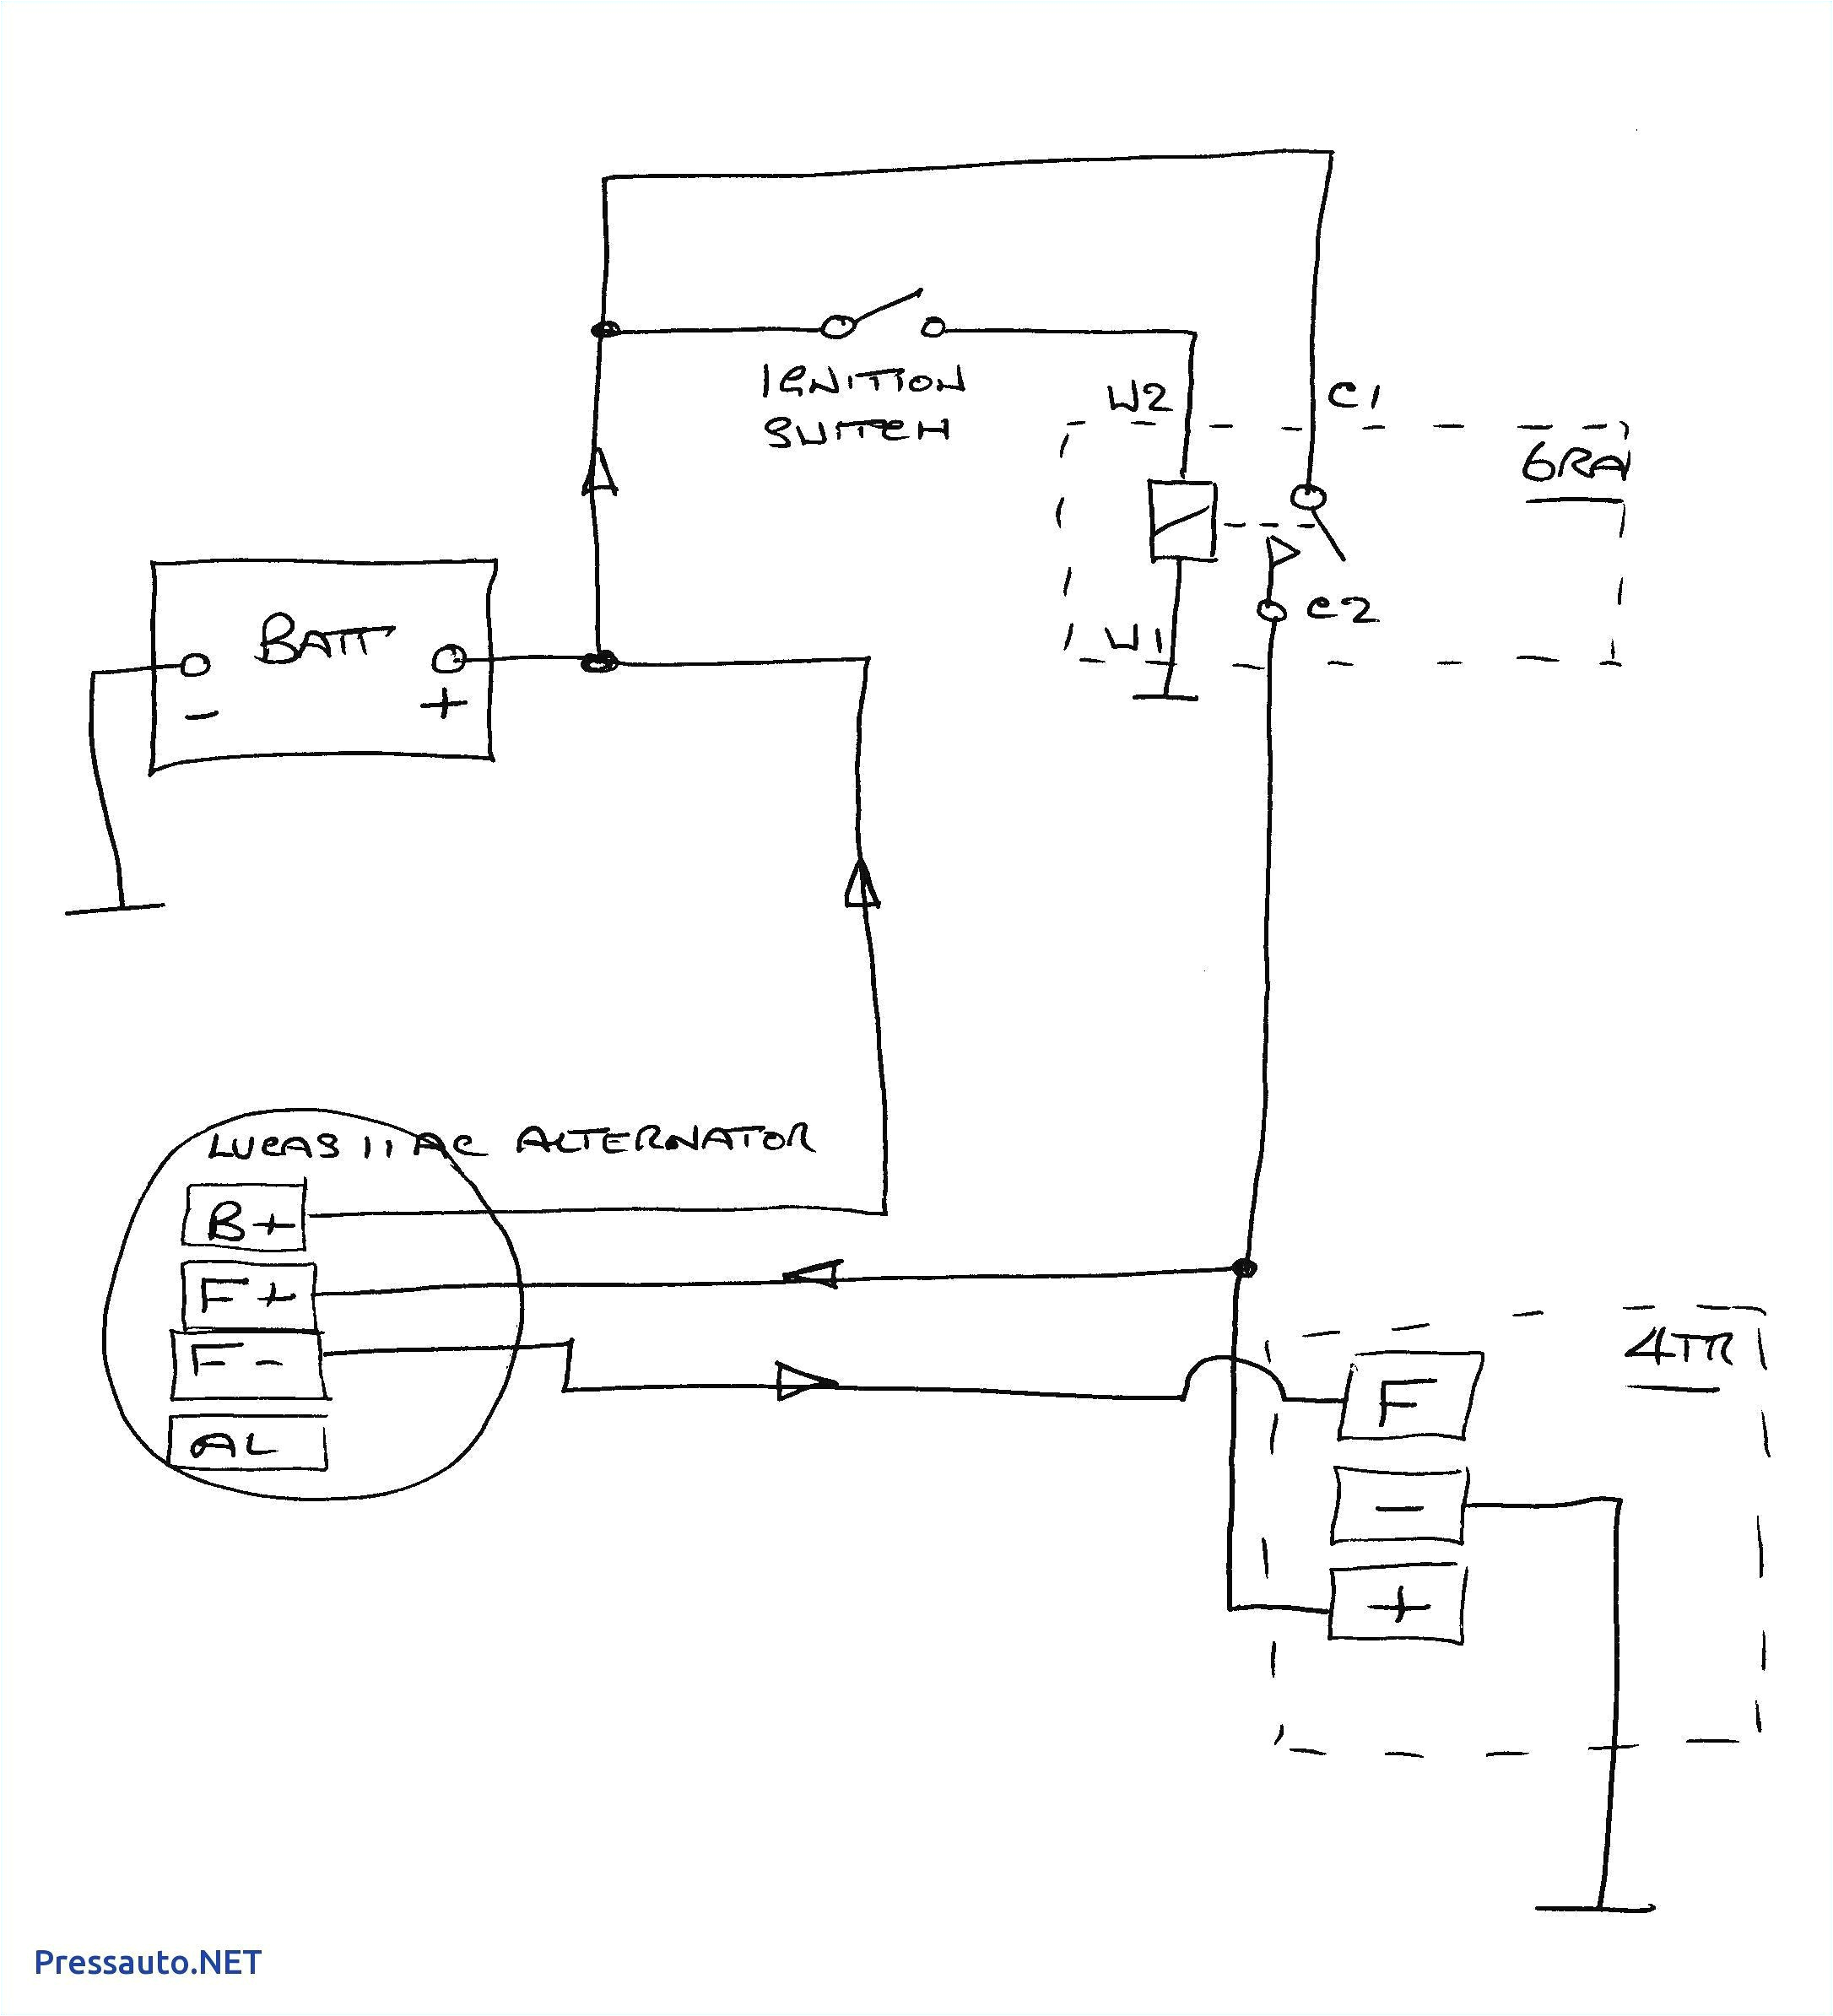 nippondenso 3 wire flasher wiring diagram wiring diagram nippondenso car ignition wiring diagram